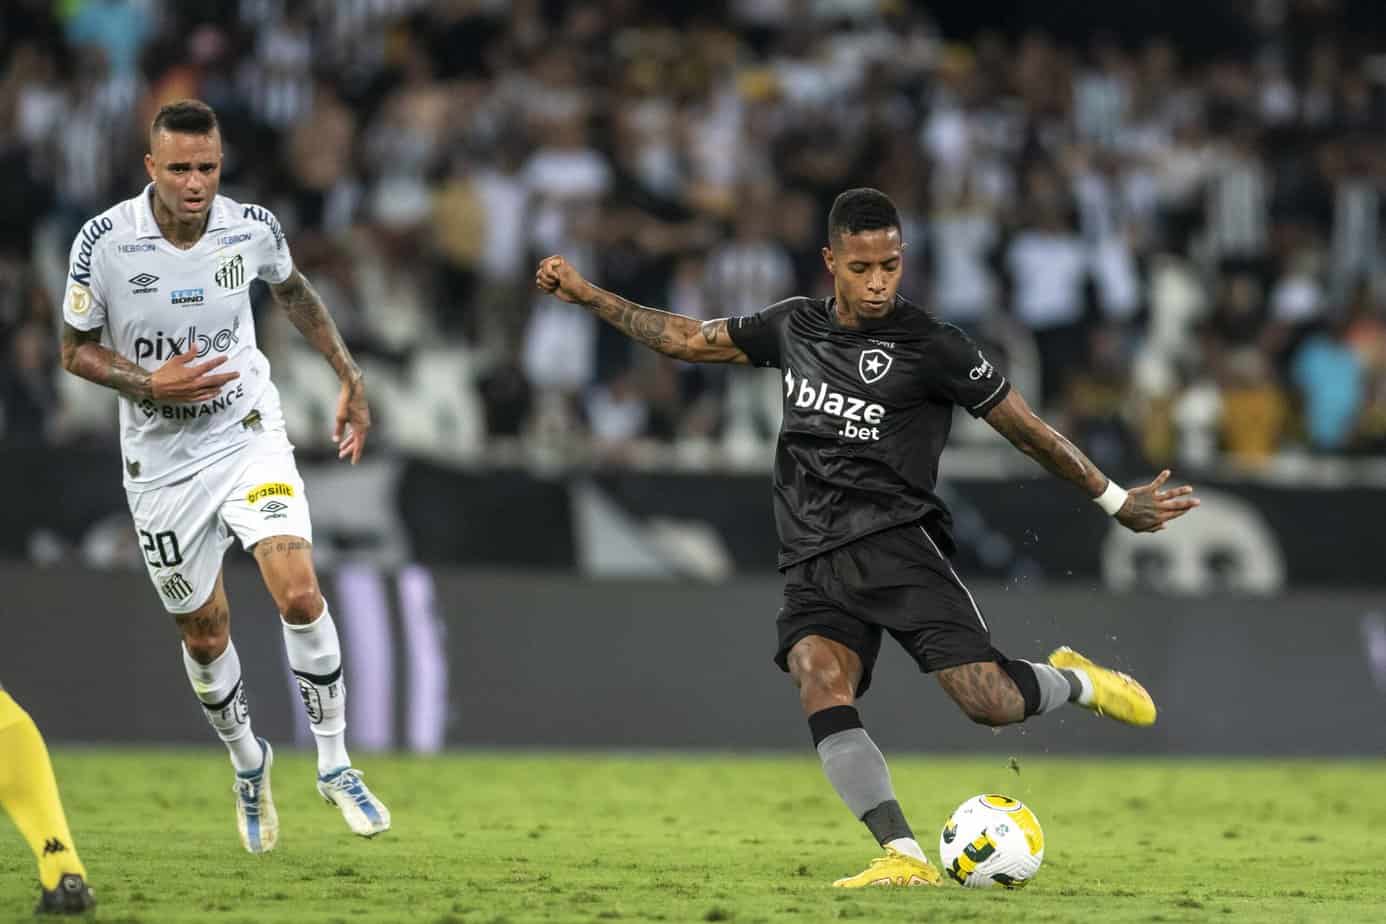 Botafogo vs. Santos Preview and Betting Odds